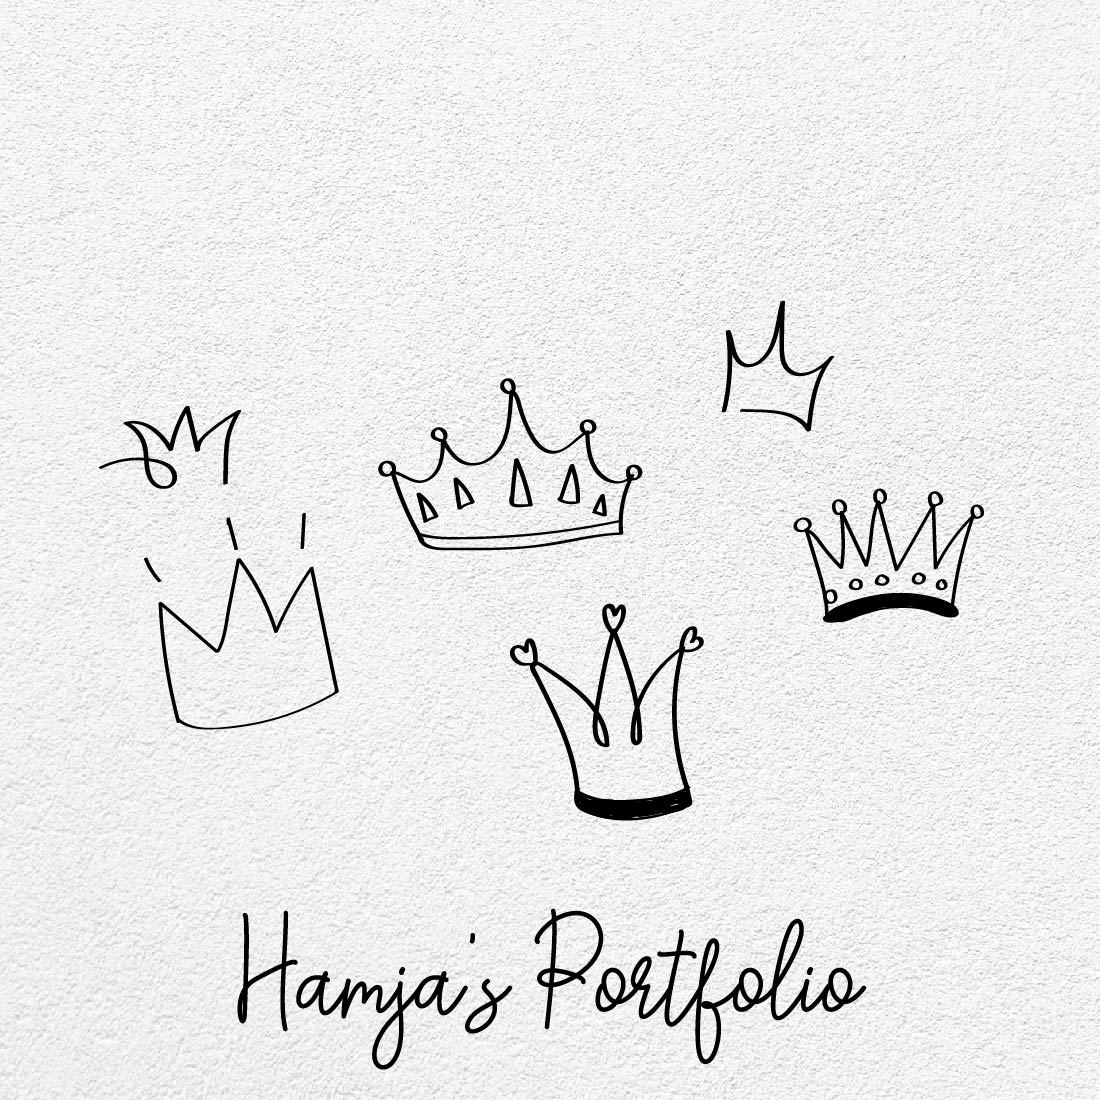 Crown SVG, Crown Bundle SVG, King, Queen, Prince, Princess Crown [vector  file]